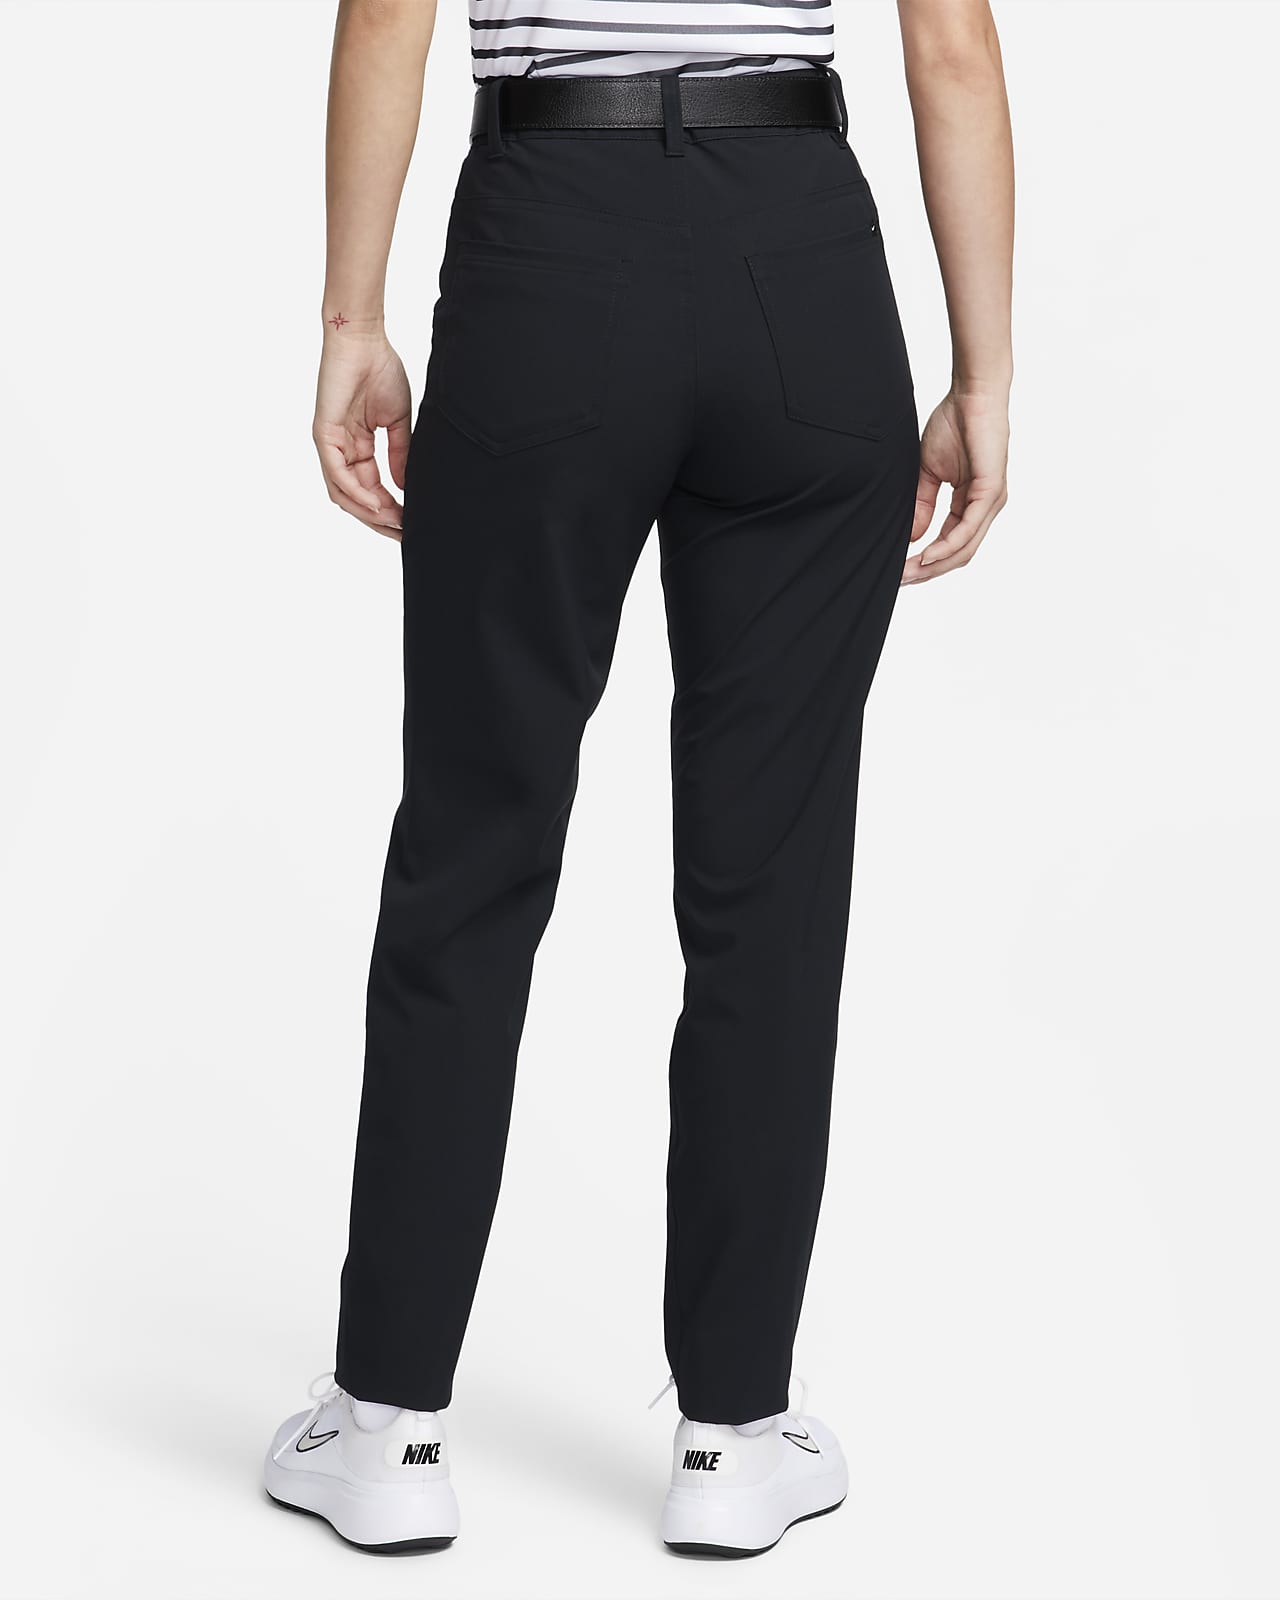 Nike Womens Dri-FIT Track Pant - Black/Reflective Silv - Womens